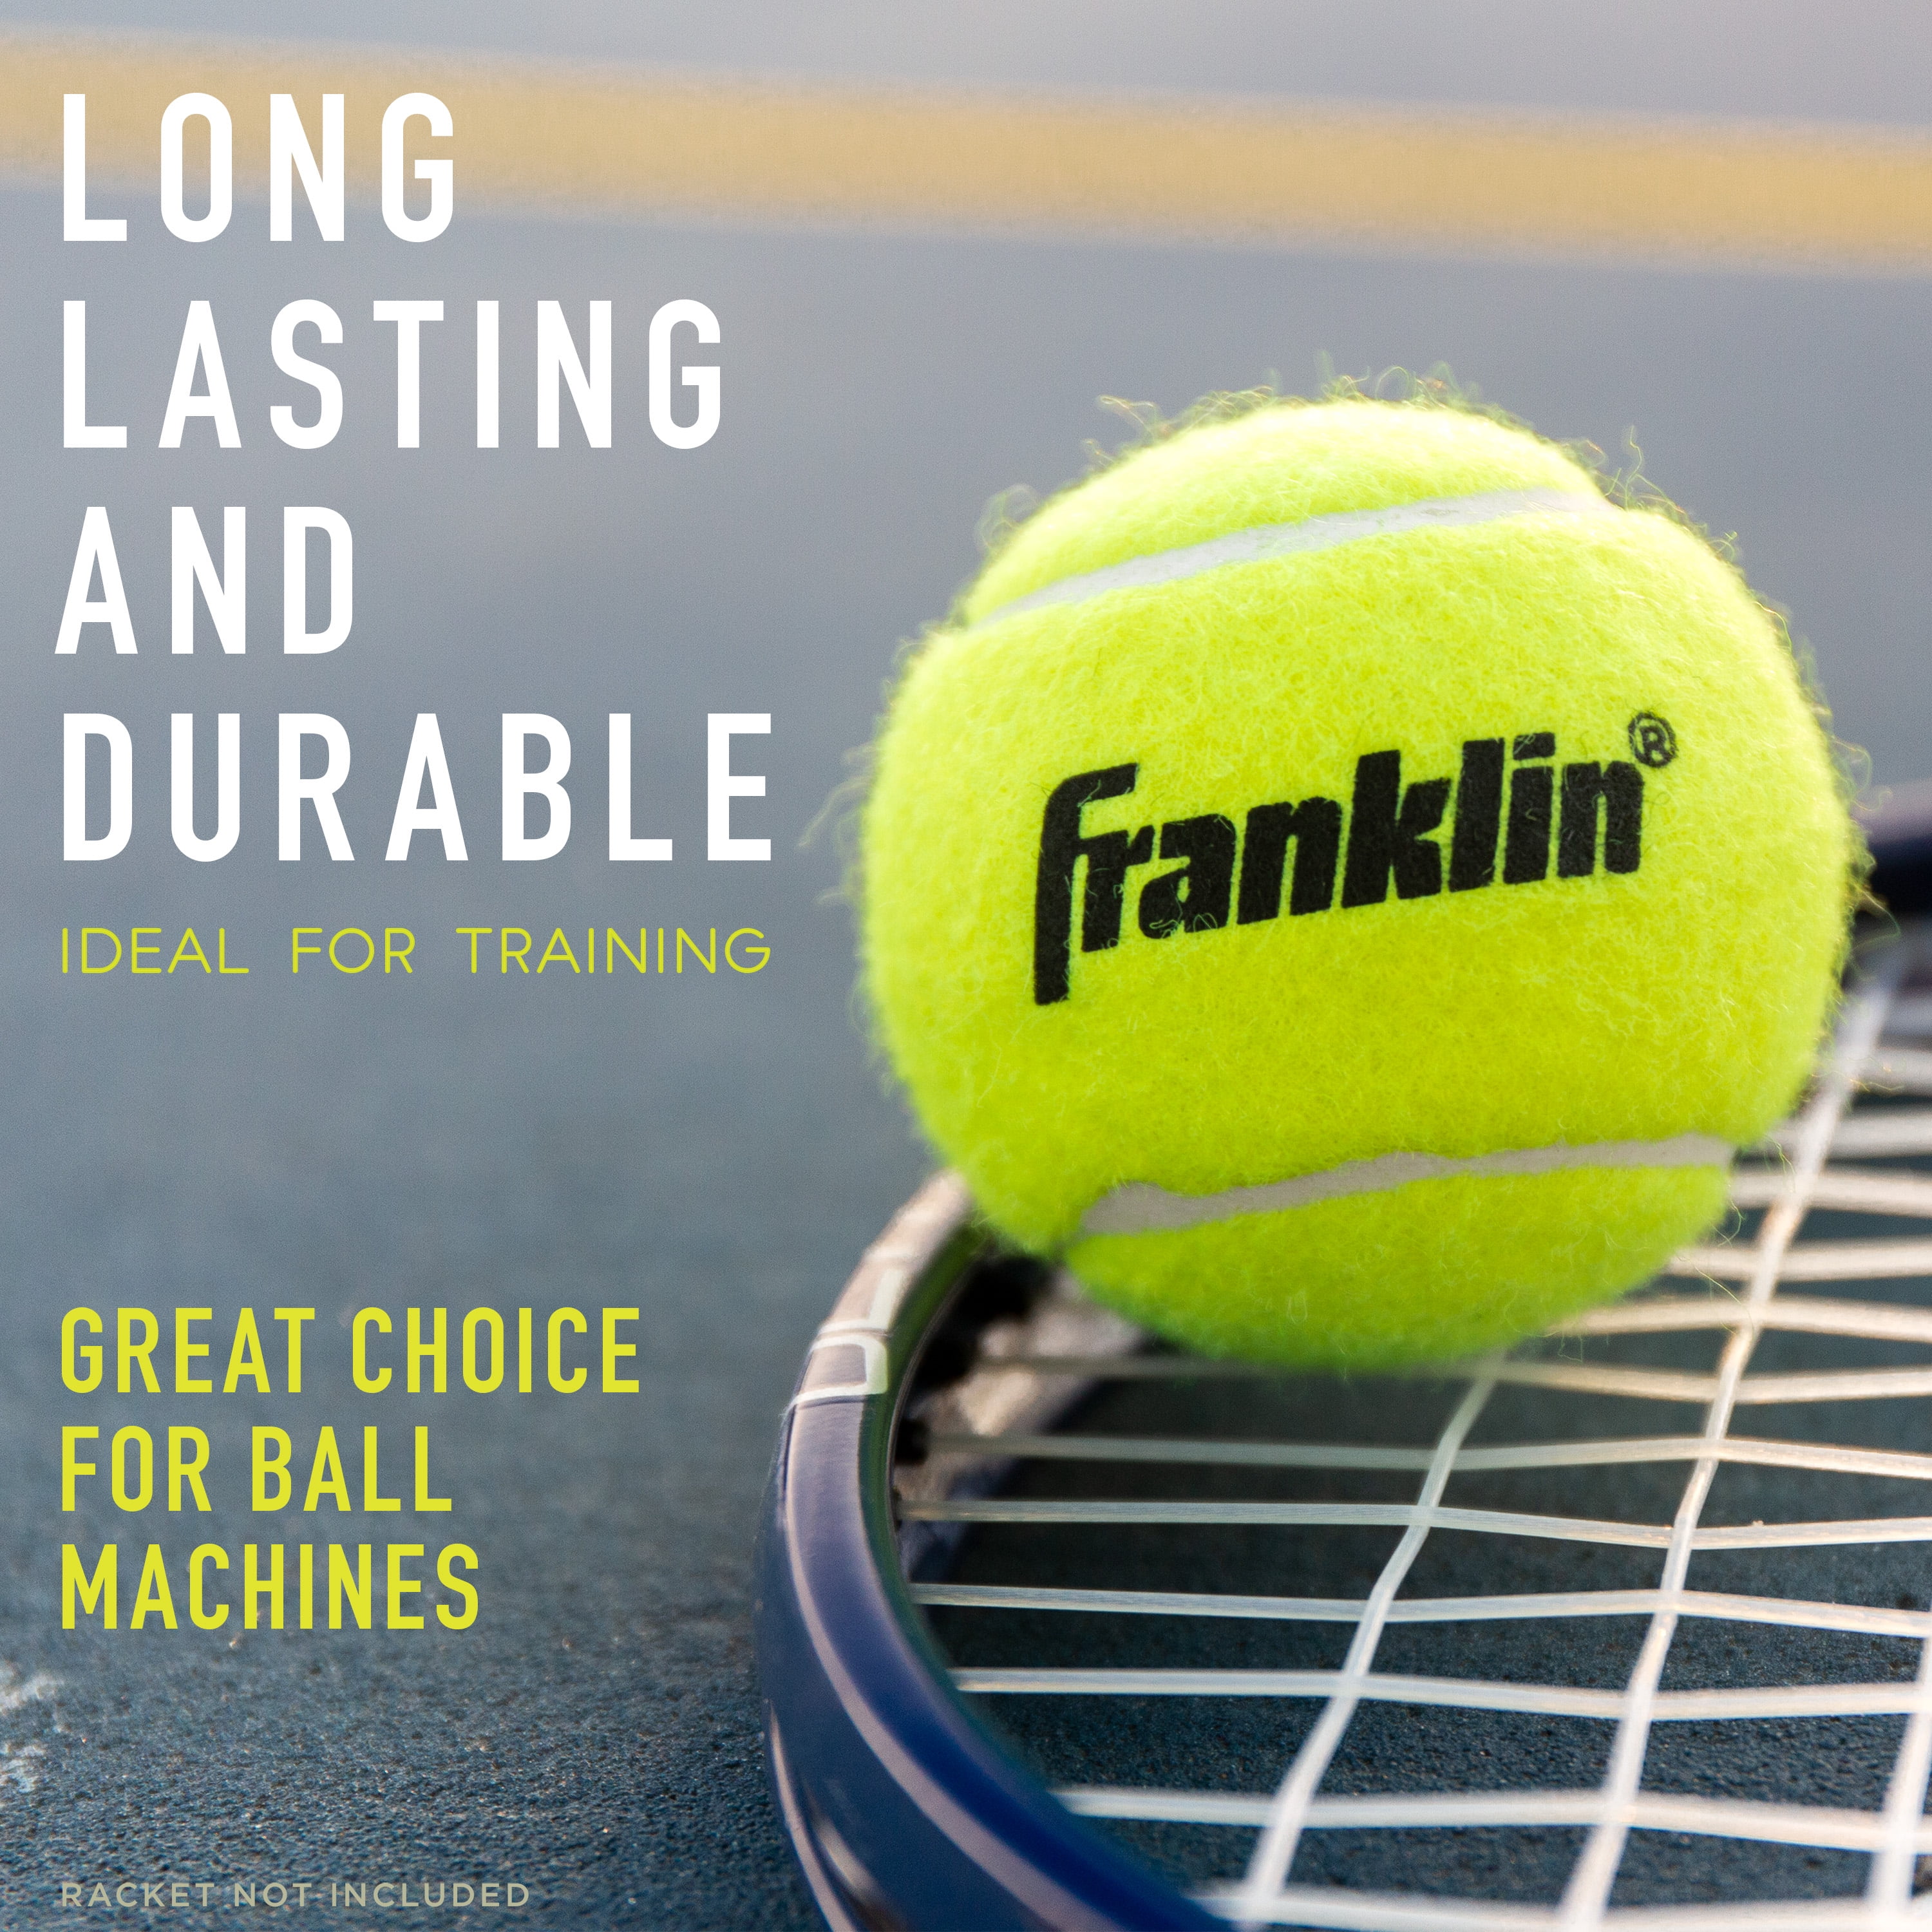 Franklin Sports Practice Tennis Balls Can - 3pk : Target